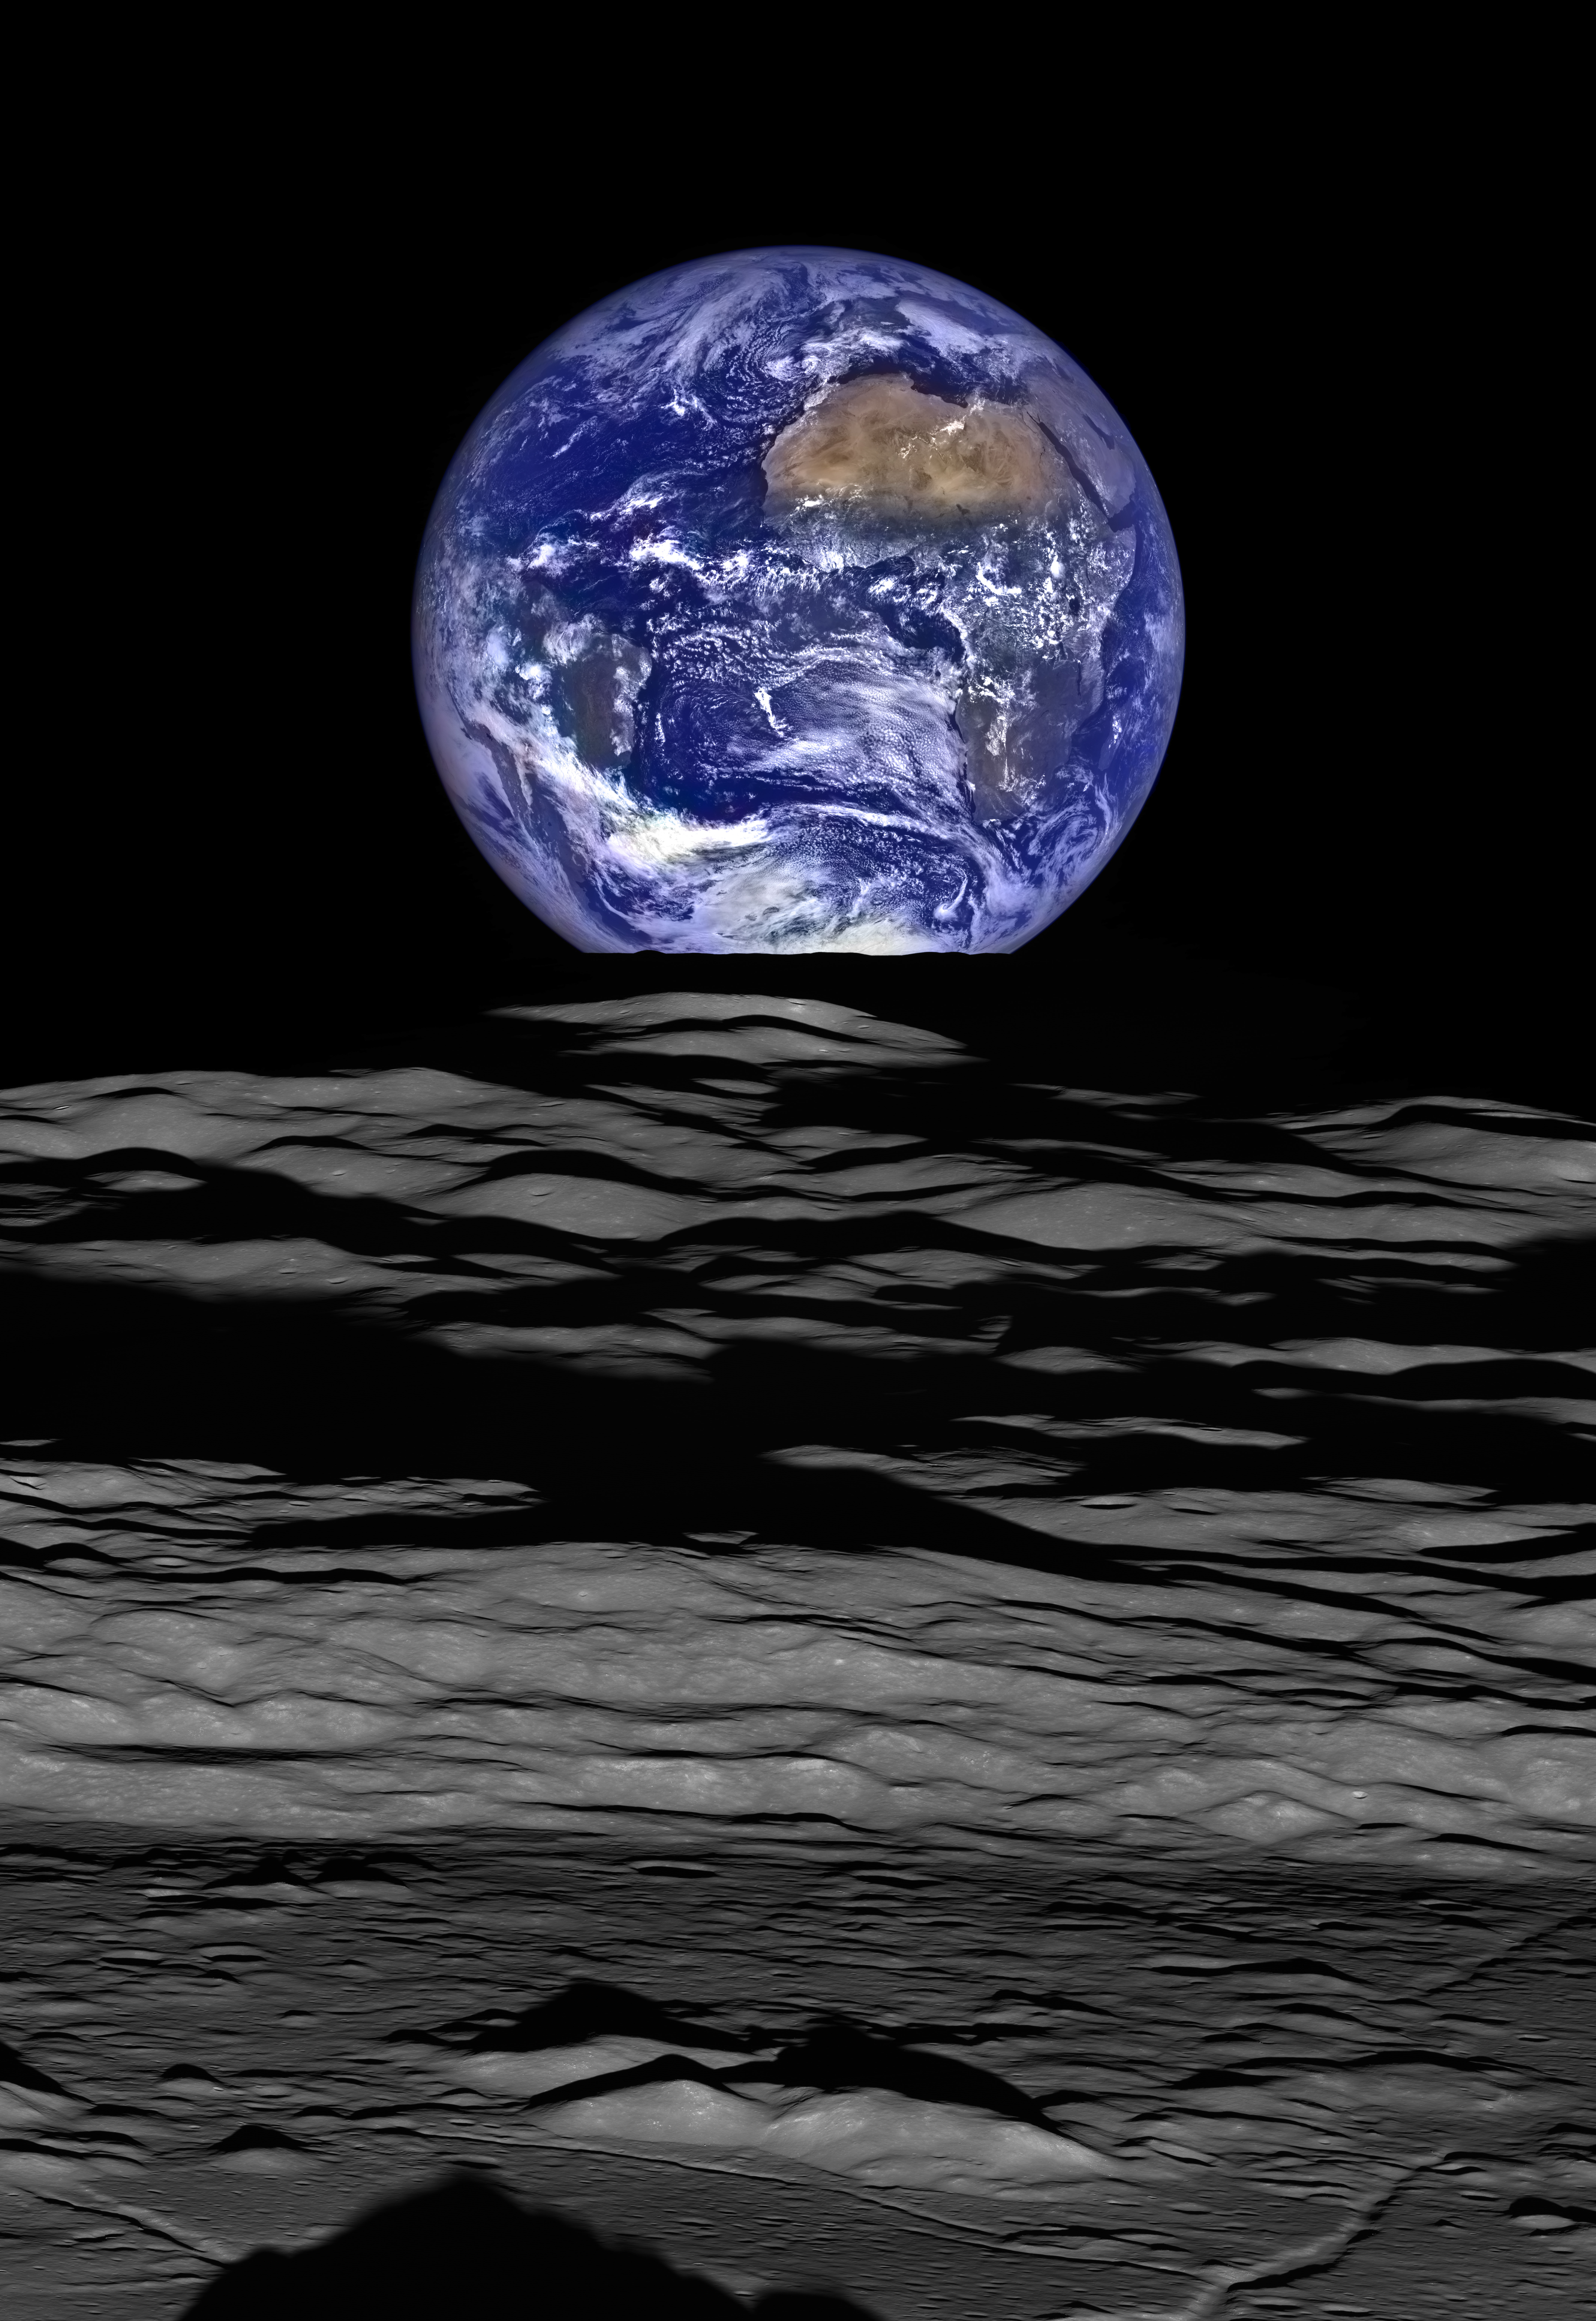 Earthset from the Lunar Reconnaissance Orbiter